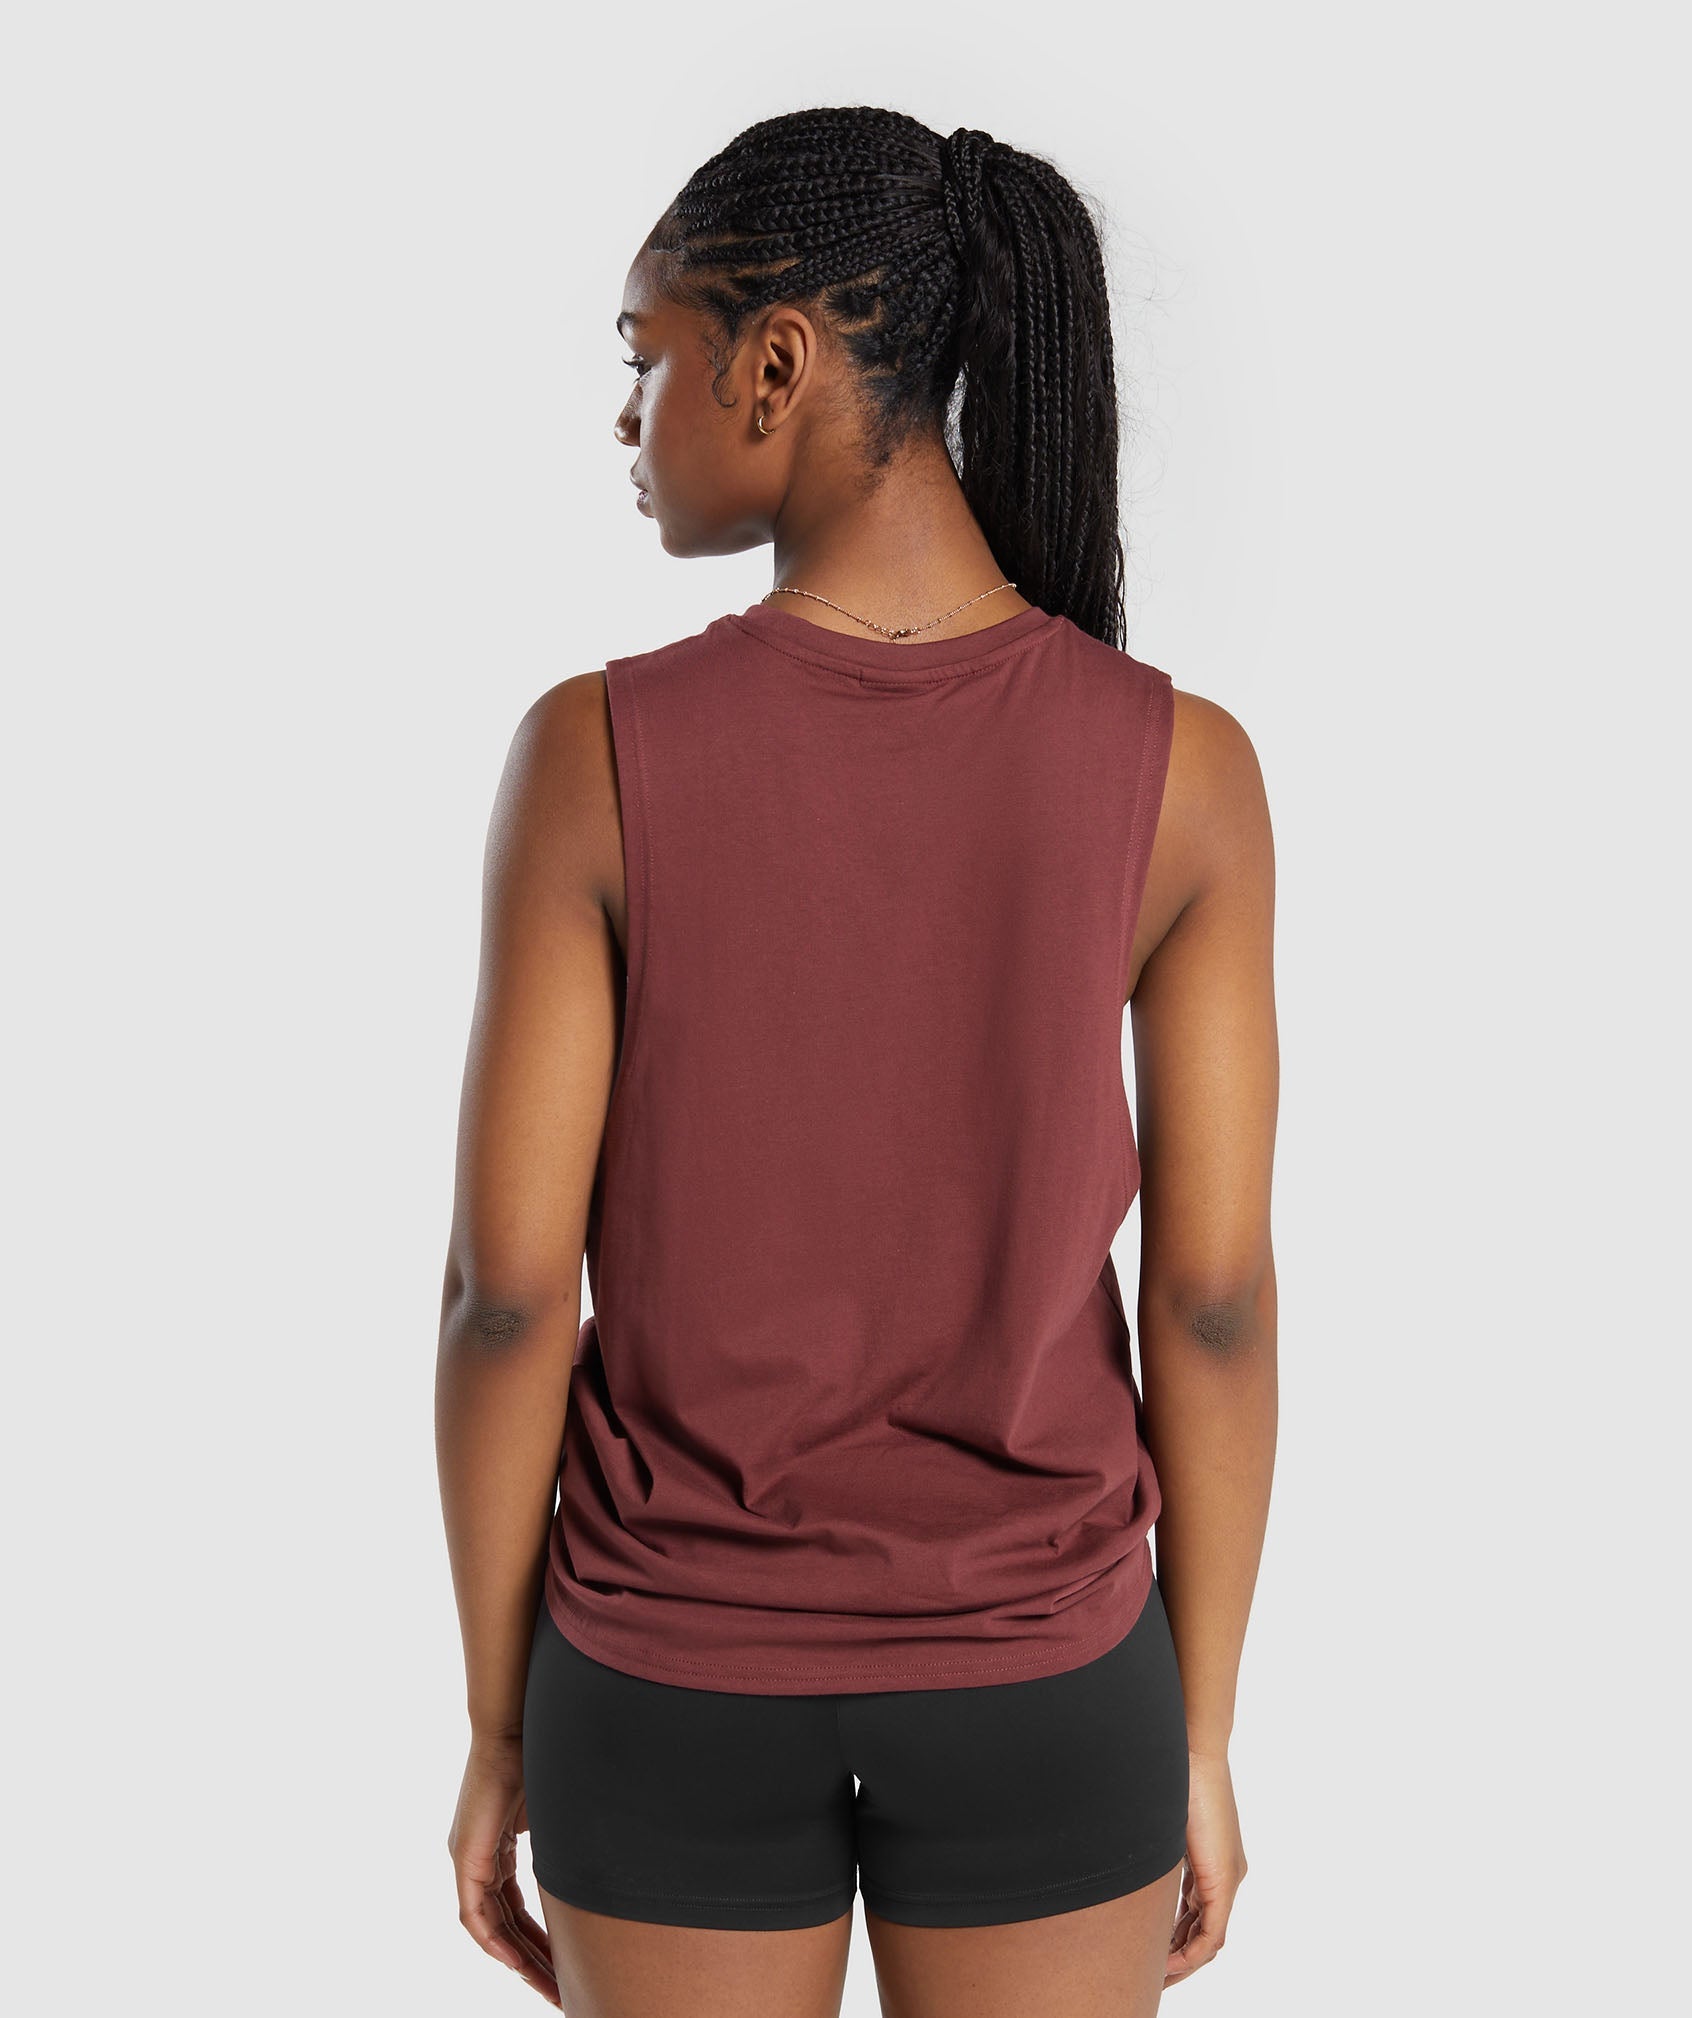 Women's Vest Tops & Tanks, T-Shirts & Tops